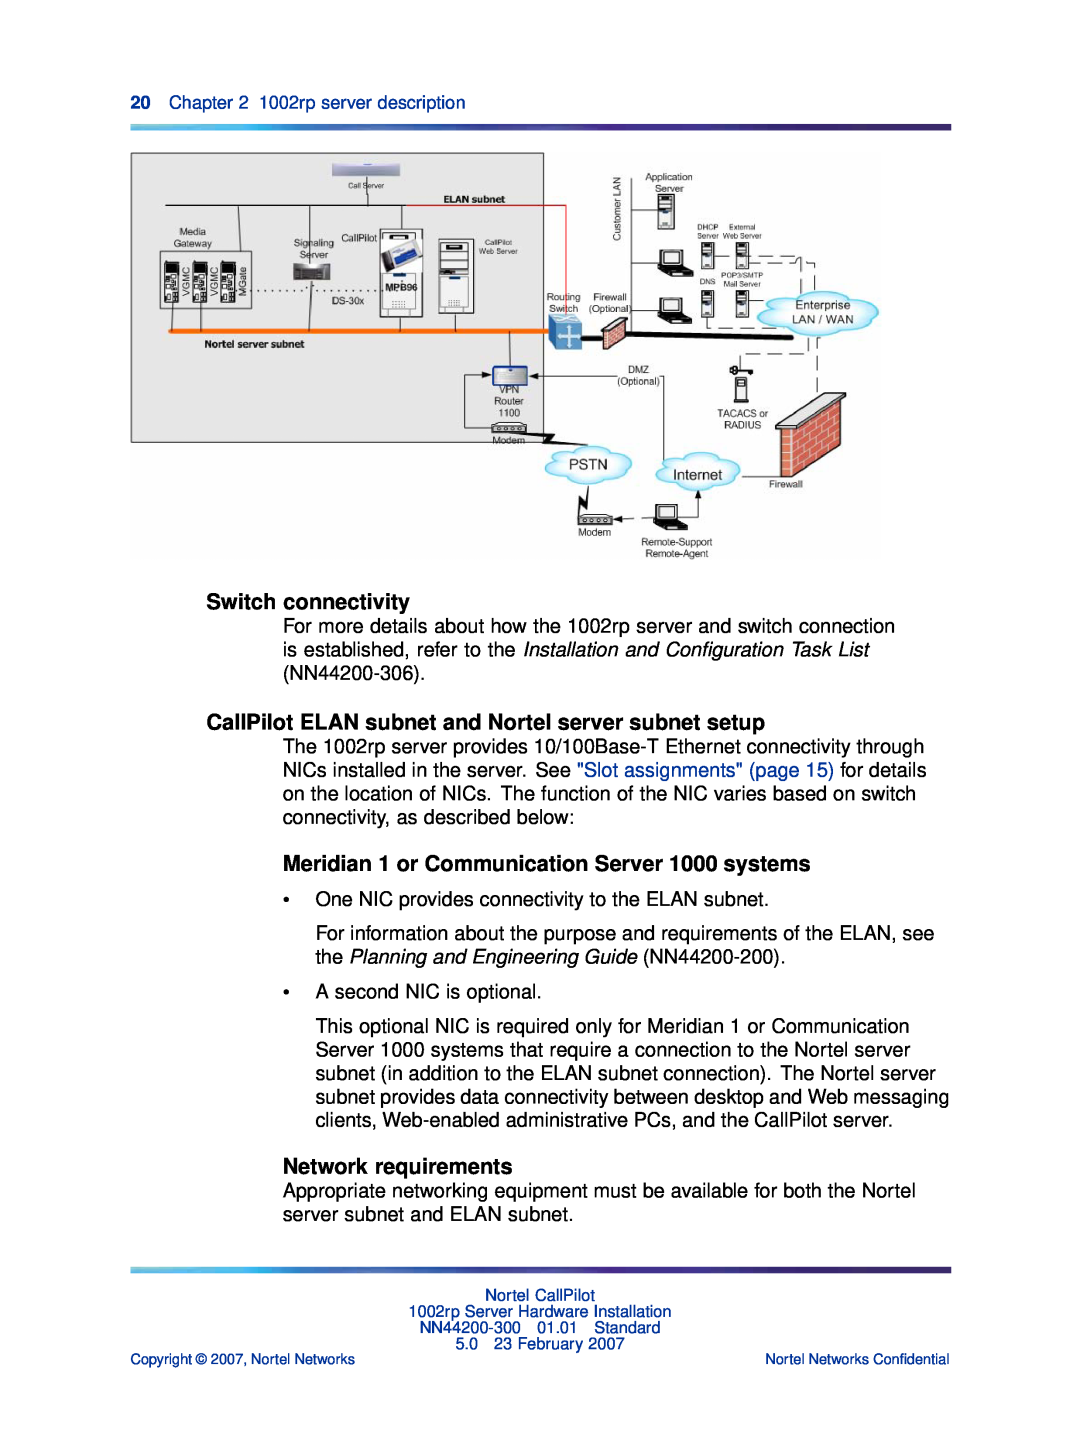 Nortel Networks NN44200-300 manual Switch connectivity, CallPilot ELAN subnet and Nortel server subnet setup 